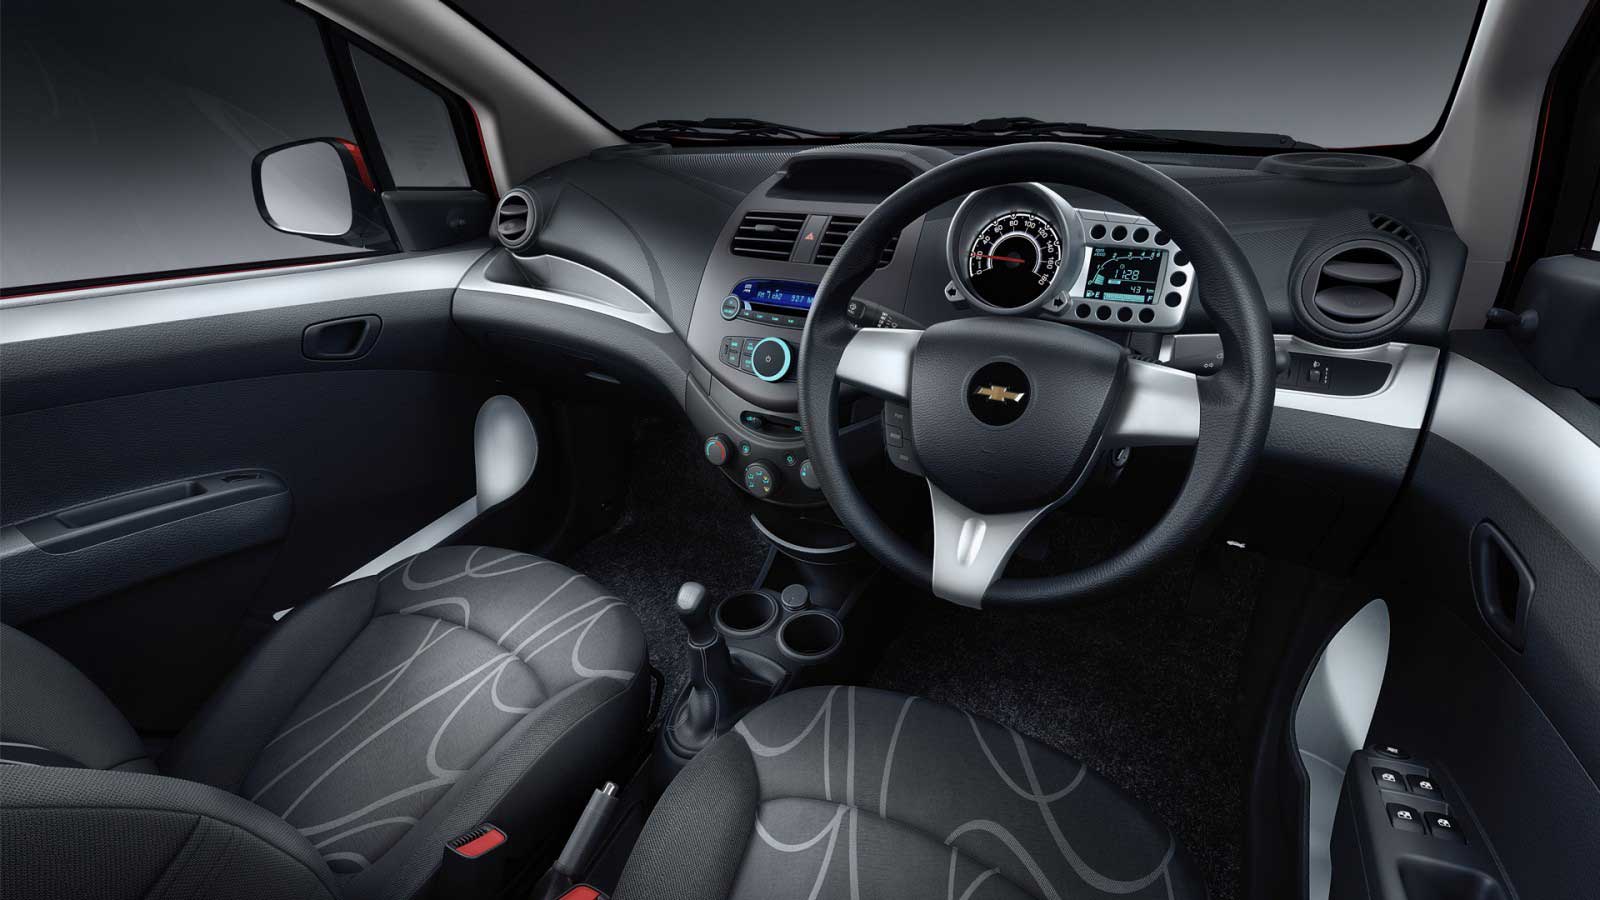 Chevrolet Beat LT Petrol Interior front view